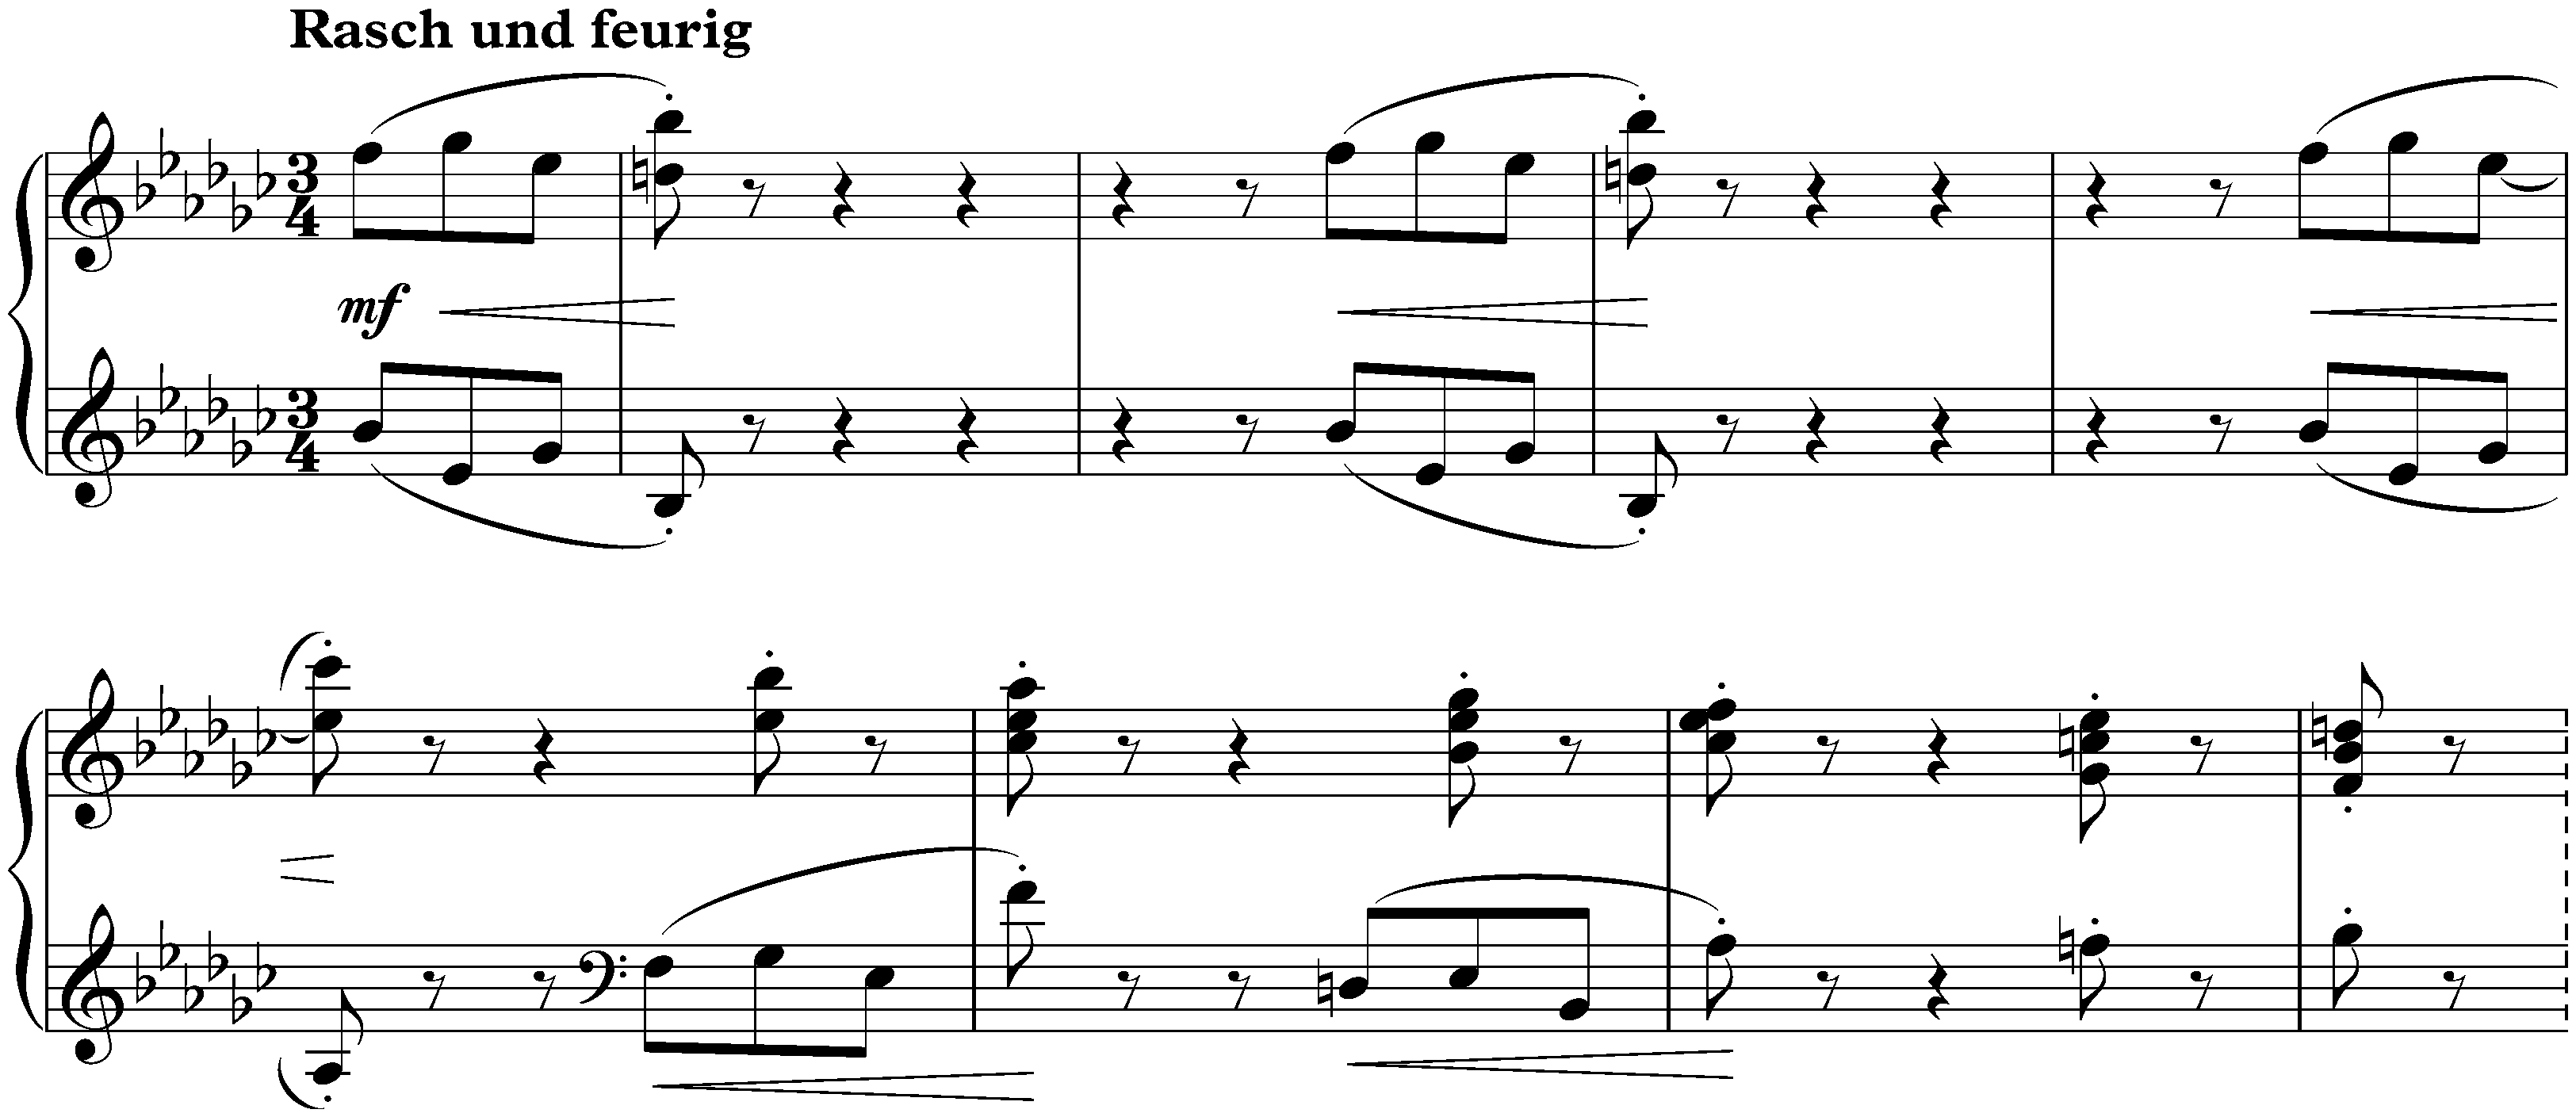 Scherzo in E-flat minor, op. 4